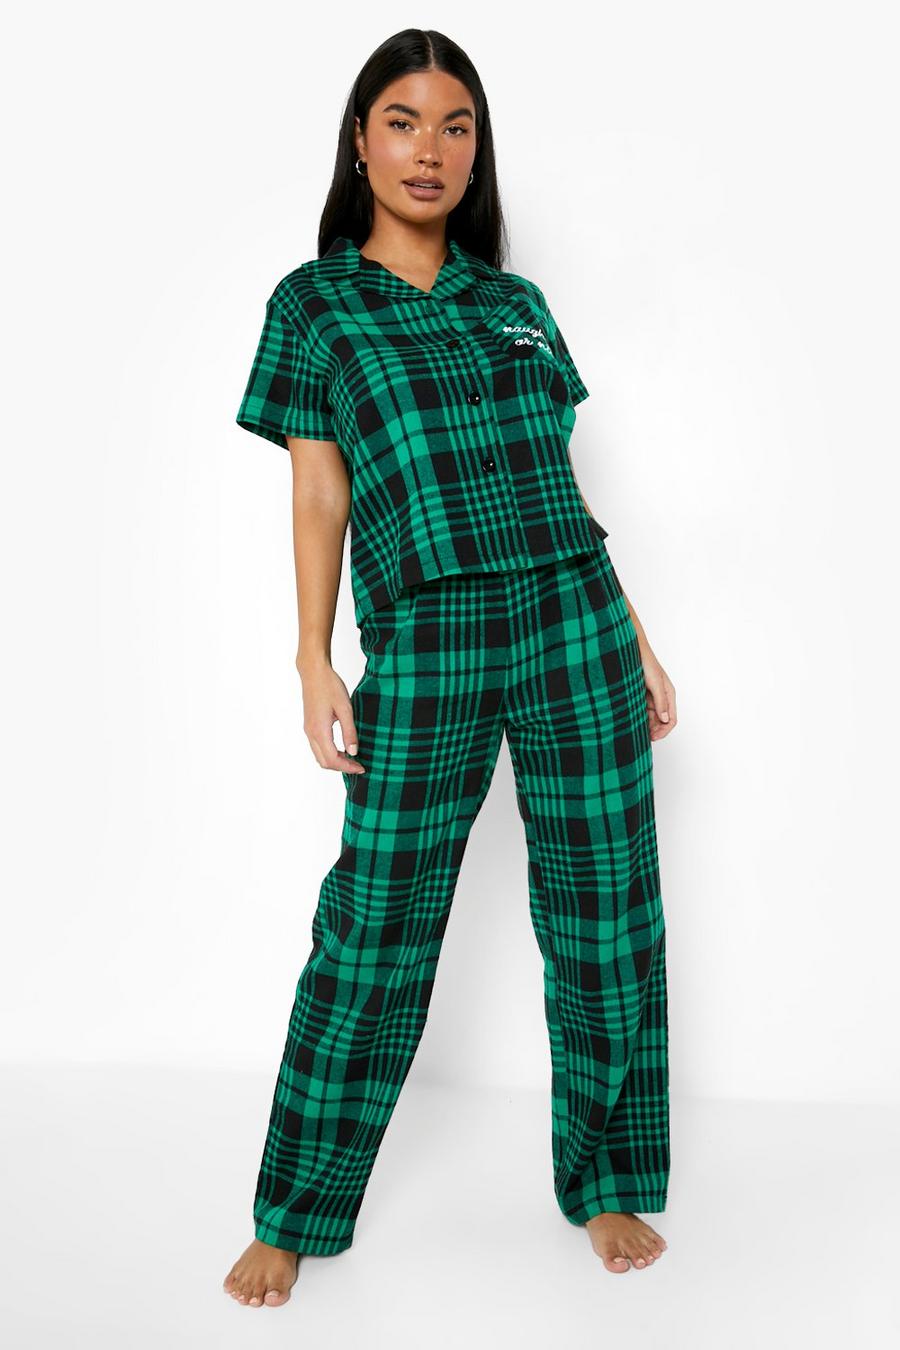 Pantalón de pijama navideño Naughty or Nice, Green verde